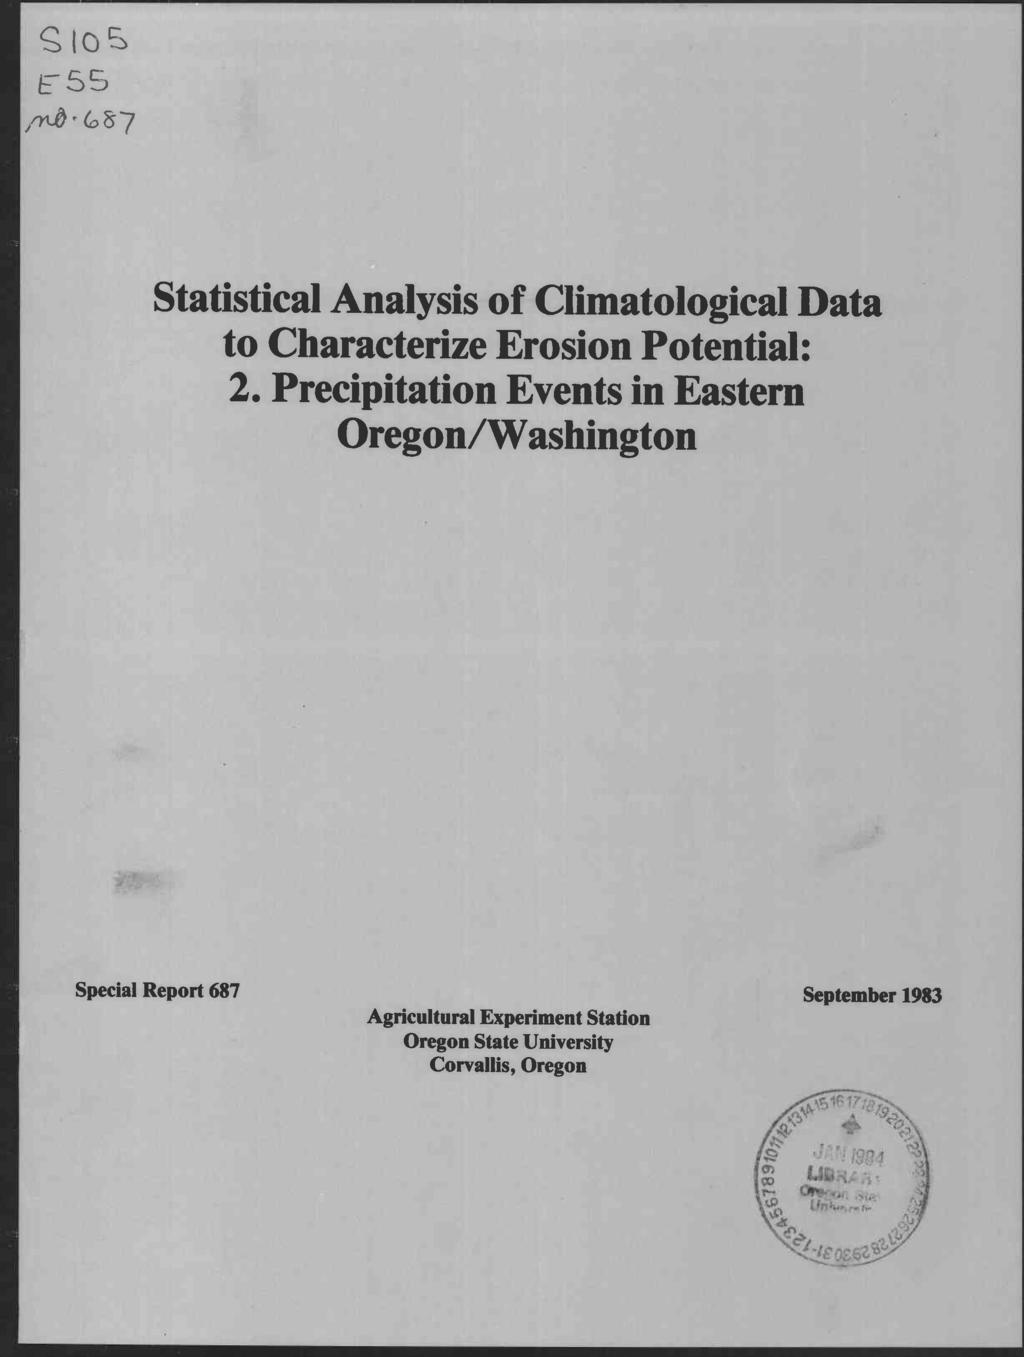 E jiyu), Statistical Analysis of Climatological Data to Characterize Erosion Potential:.